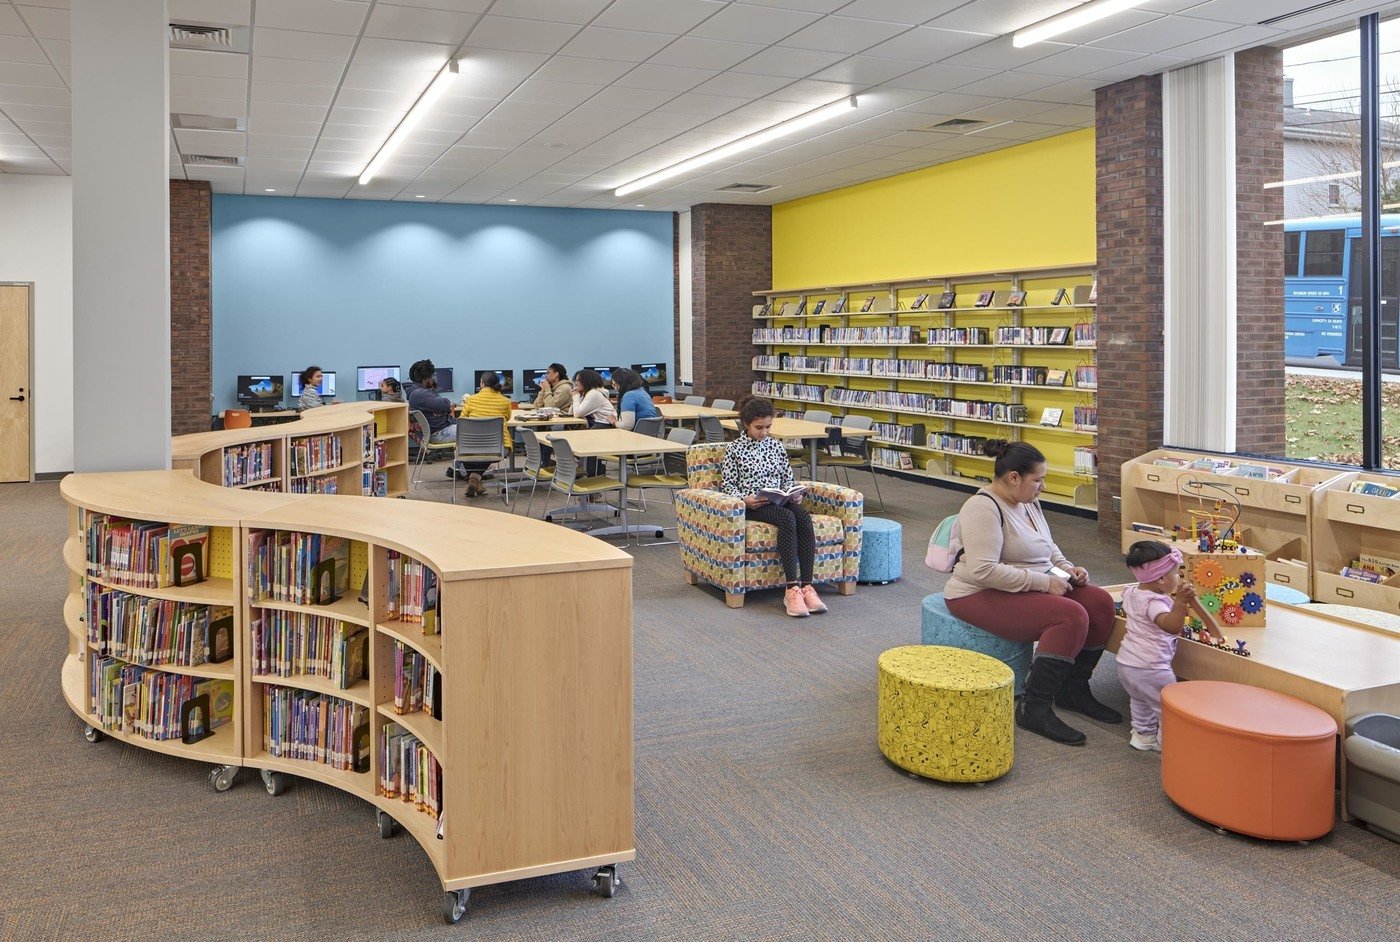 9 tskp meriden public library connecticut interior childrens reading 1400 0x0x3000x2018 q85